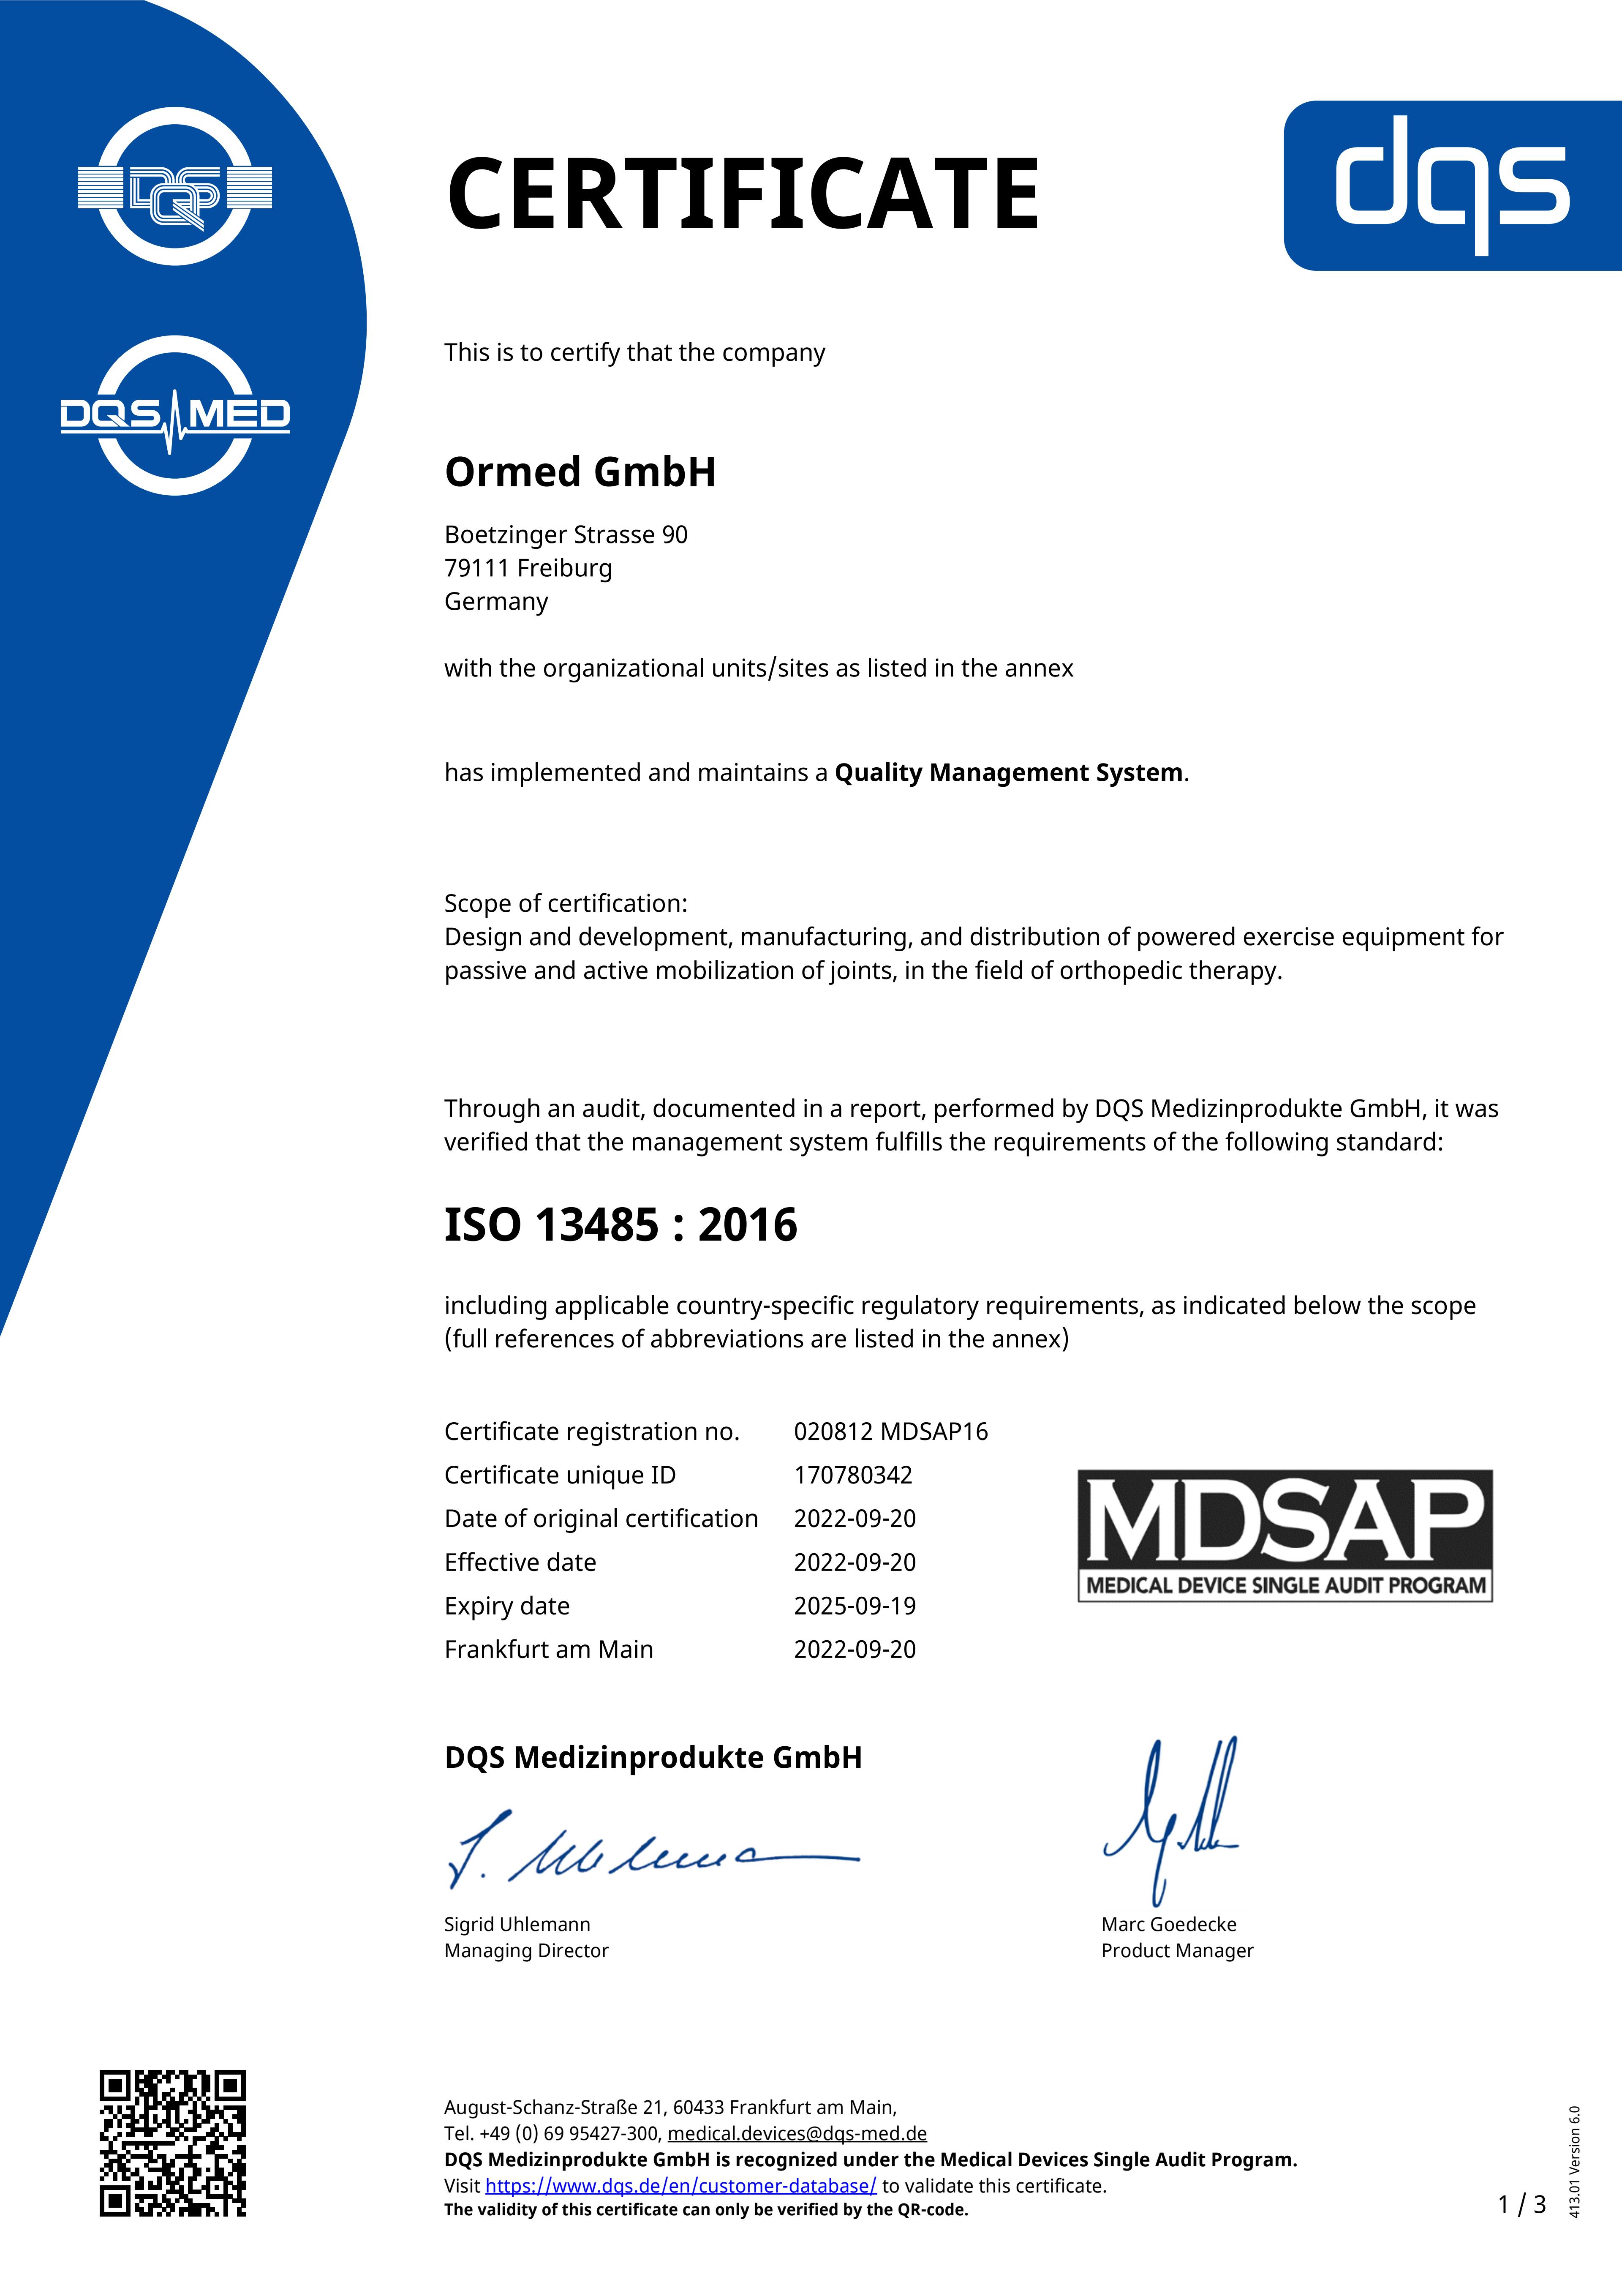 020812 - Ormed GmbH - CERTIFICATE - englisch - 2022-09-20 - MDSAP16.pdf